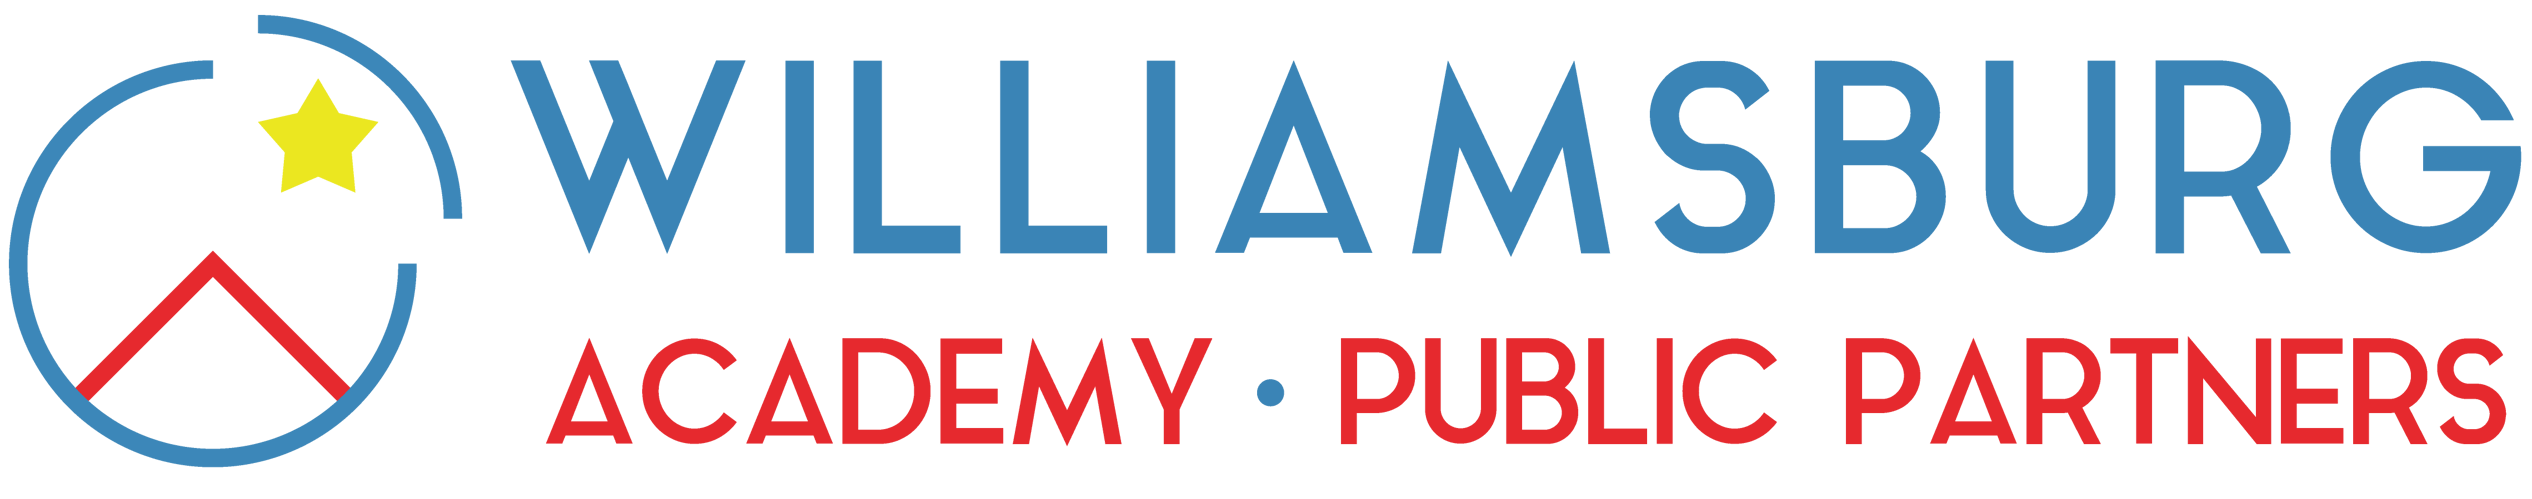 Williamsburg-Academy-Public-Partners-logo